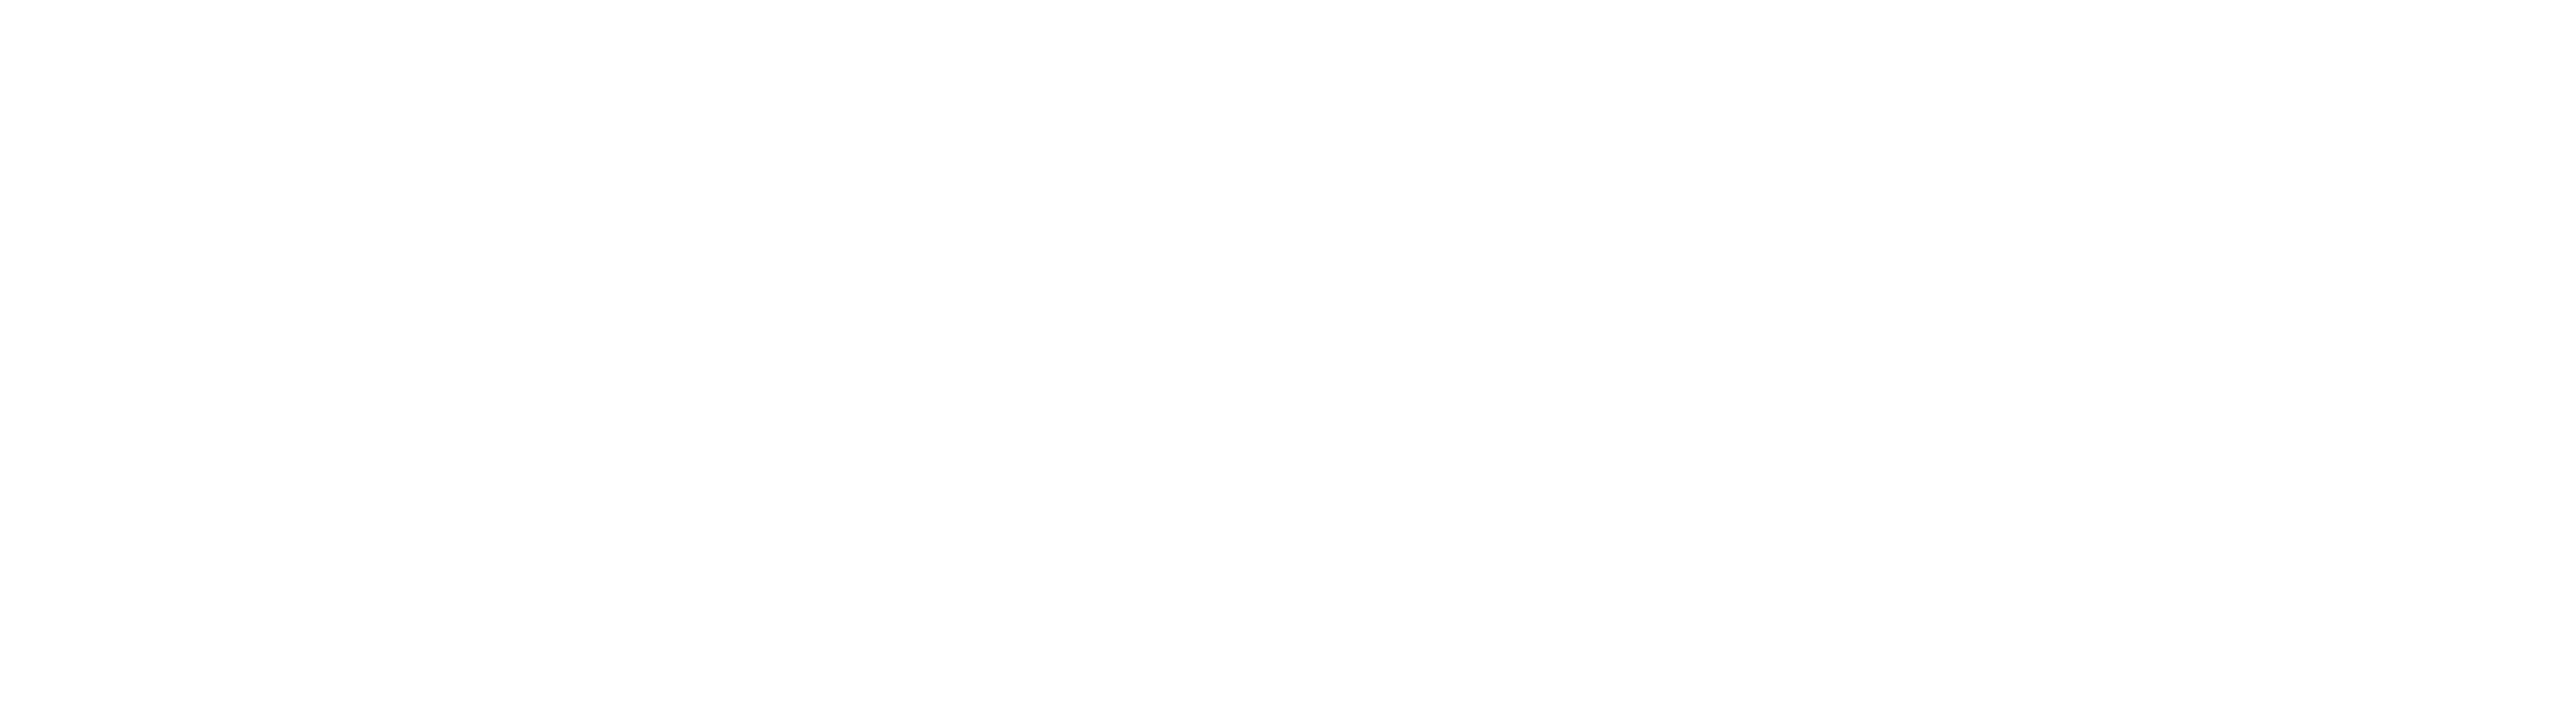 Kyra Logo - KYRA Jobs